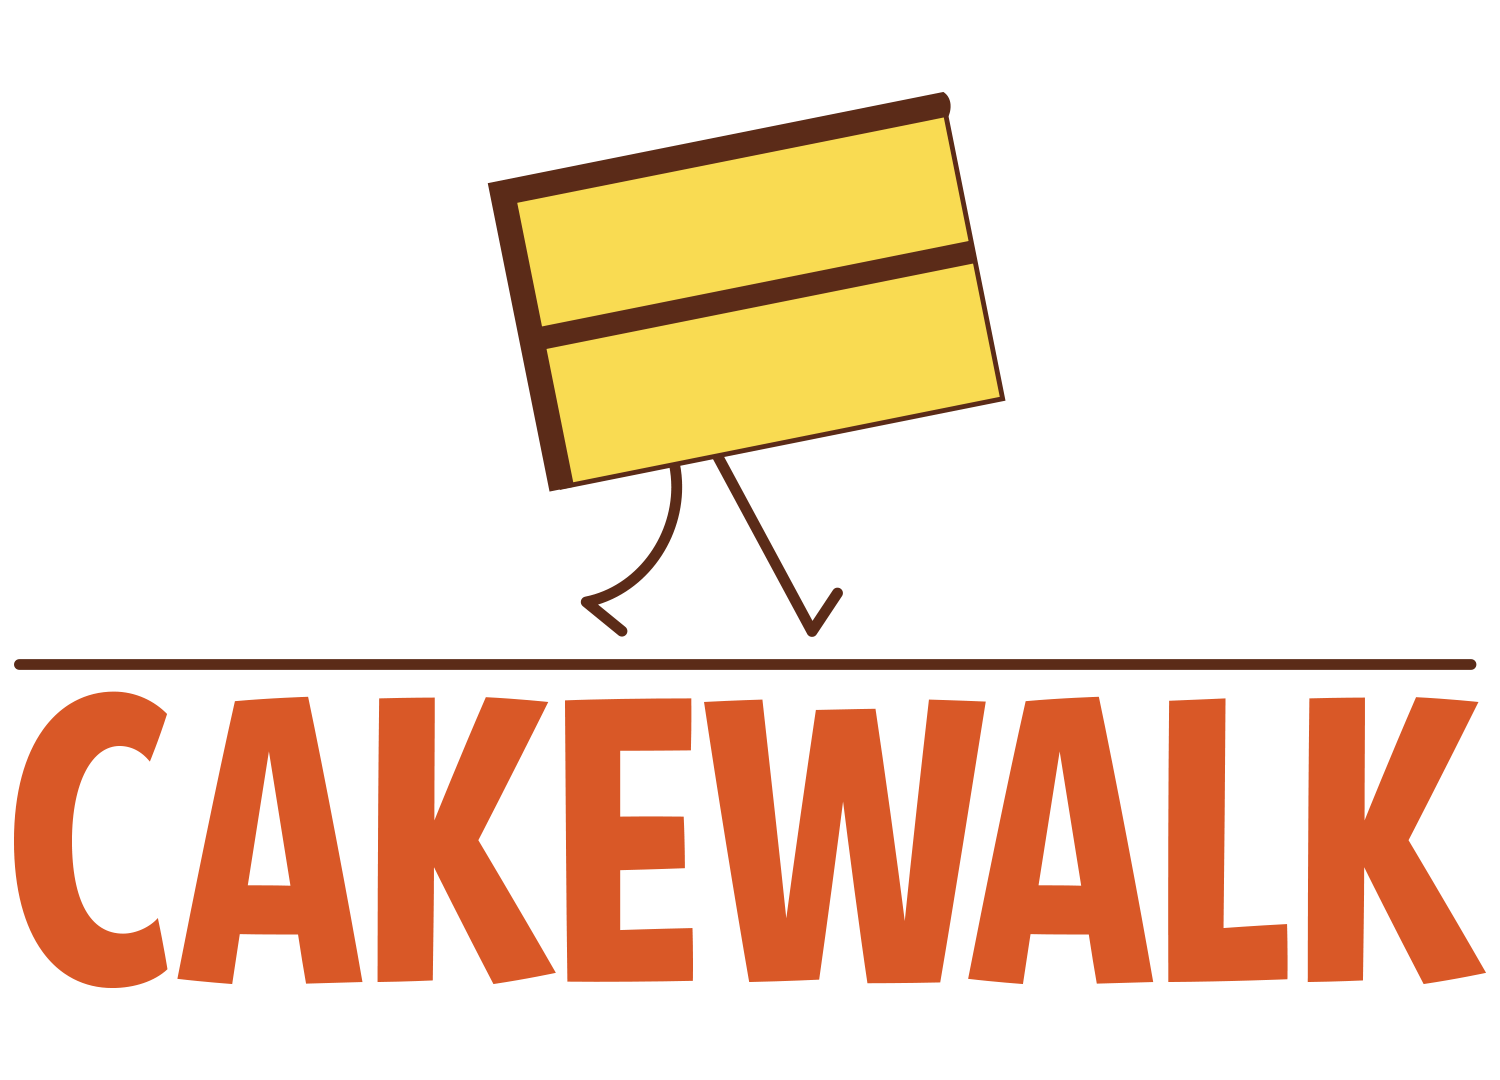 Cakewalk Logo - Cakewalk